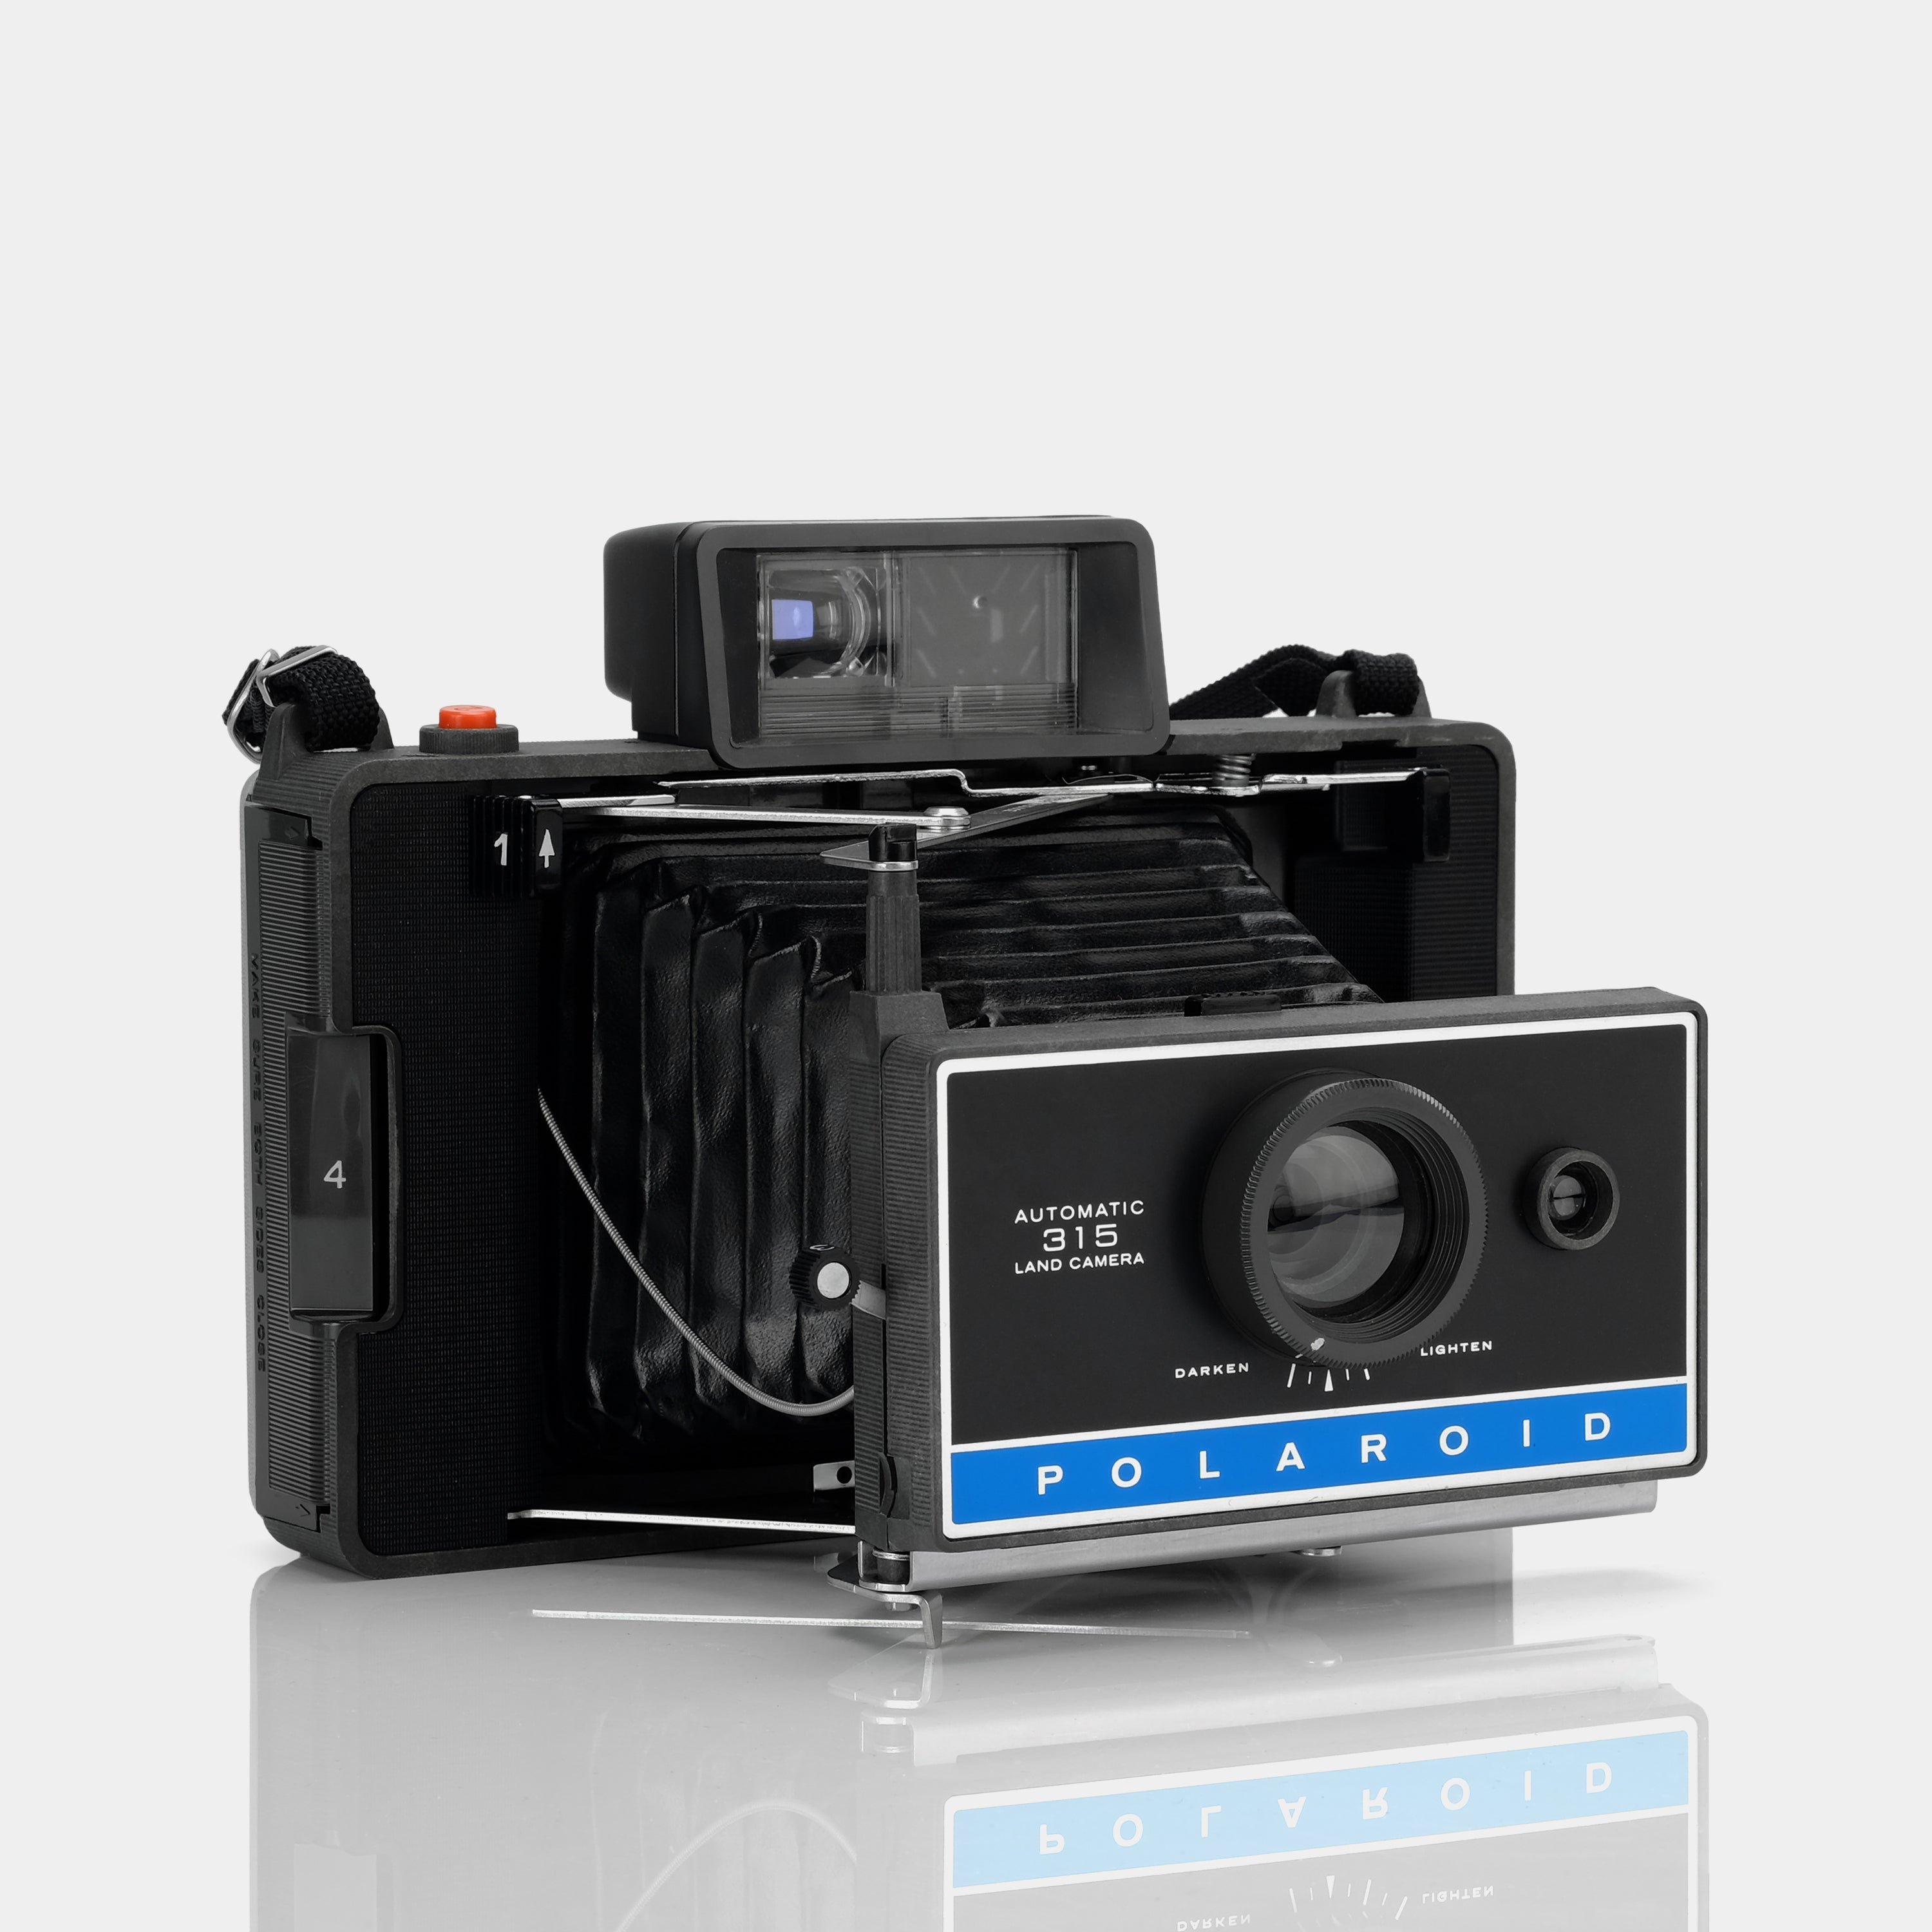 Polaroid Model 315 Packfilm Land Camera